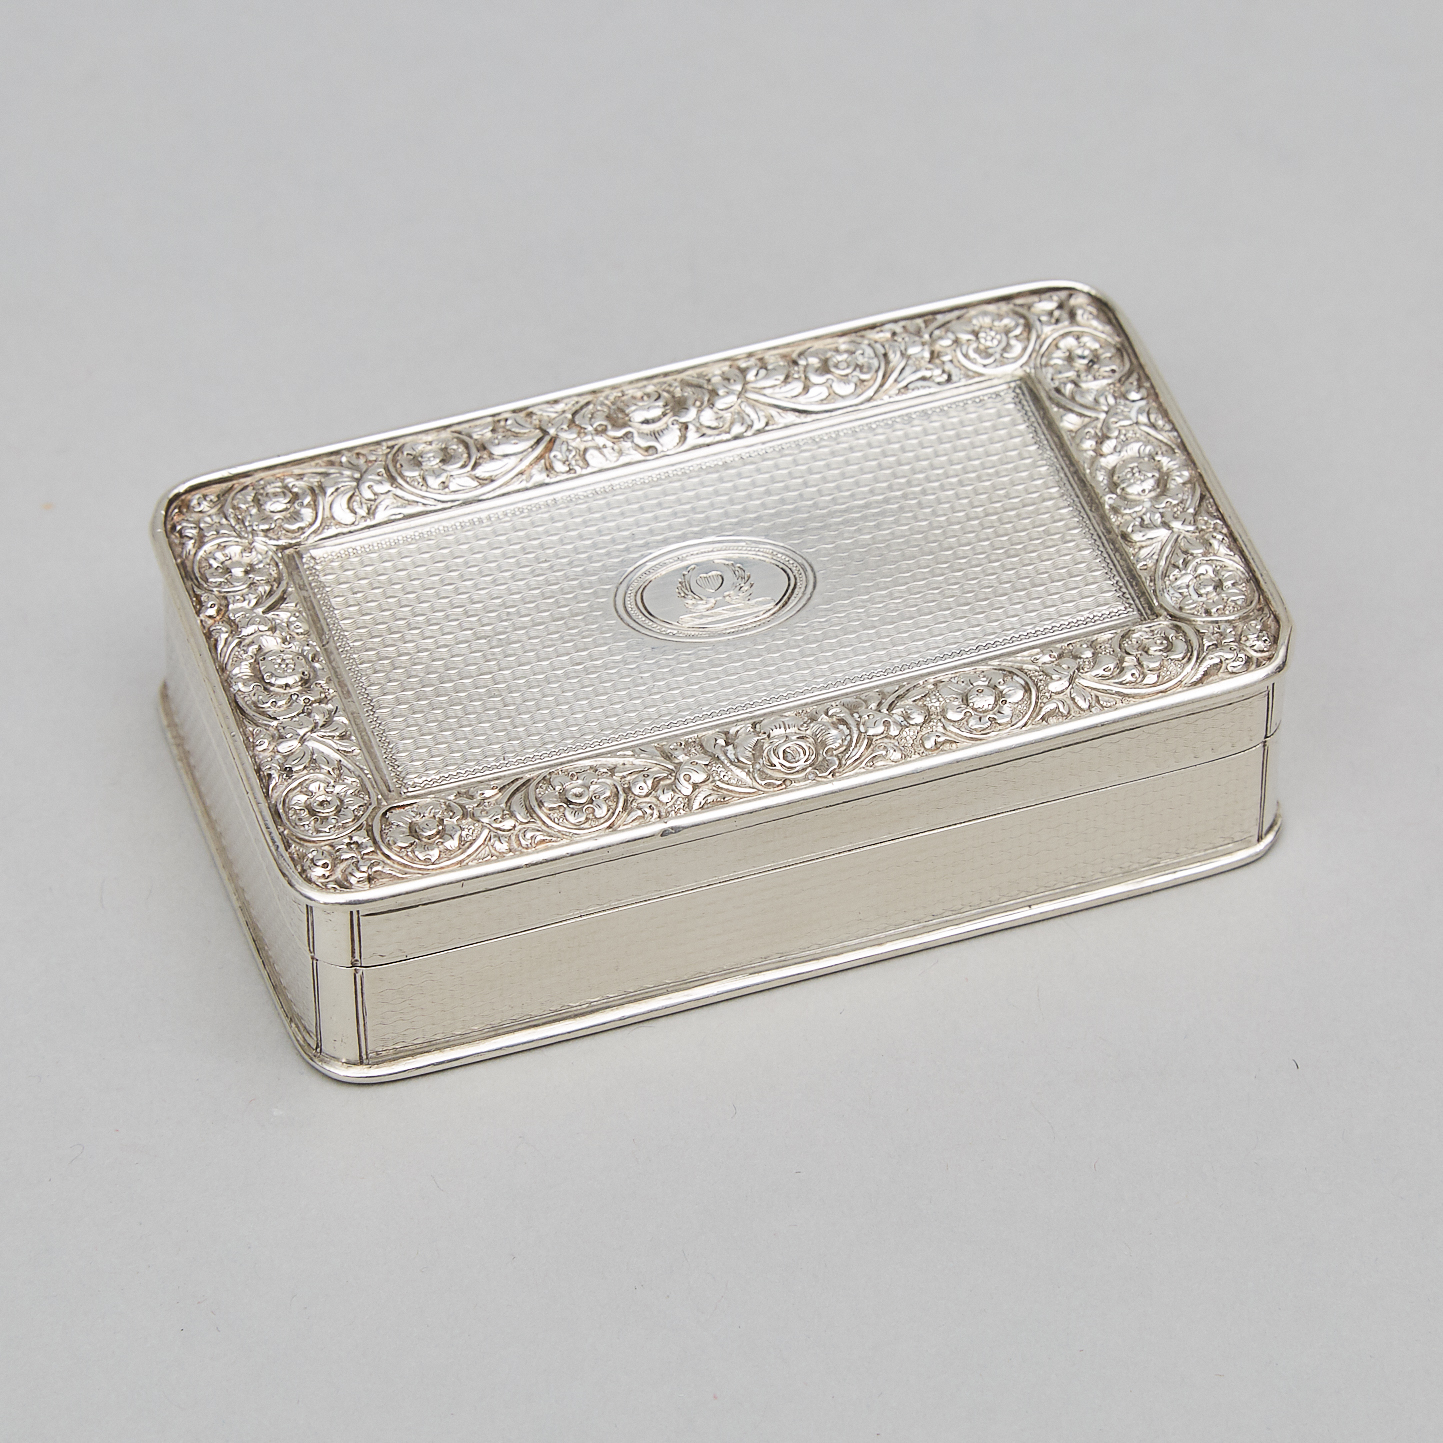 George III Silver Rectangular Table Snuff Box, William Ellerby, London, 1818